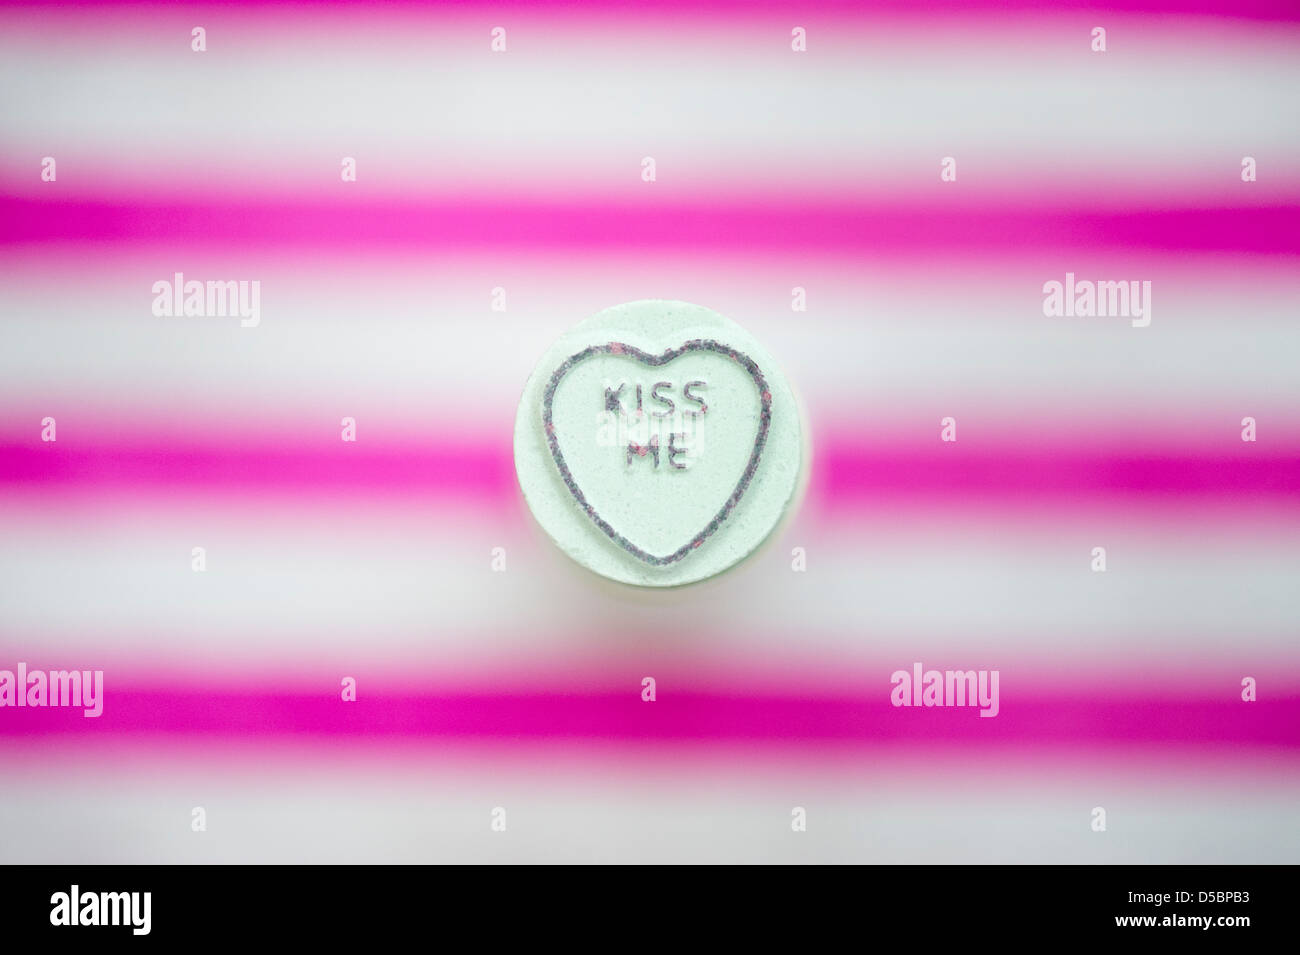 Kiss Me. Love hearts. Retro sweet pattern Stock Photo